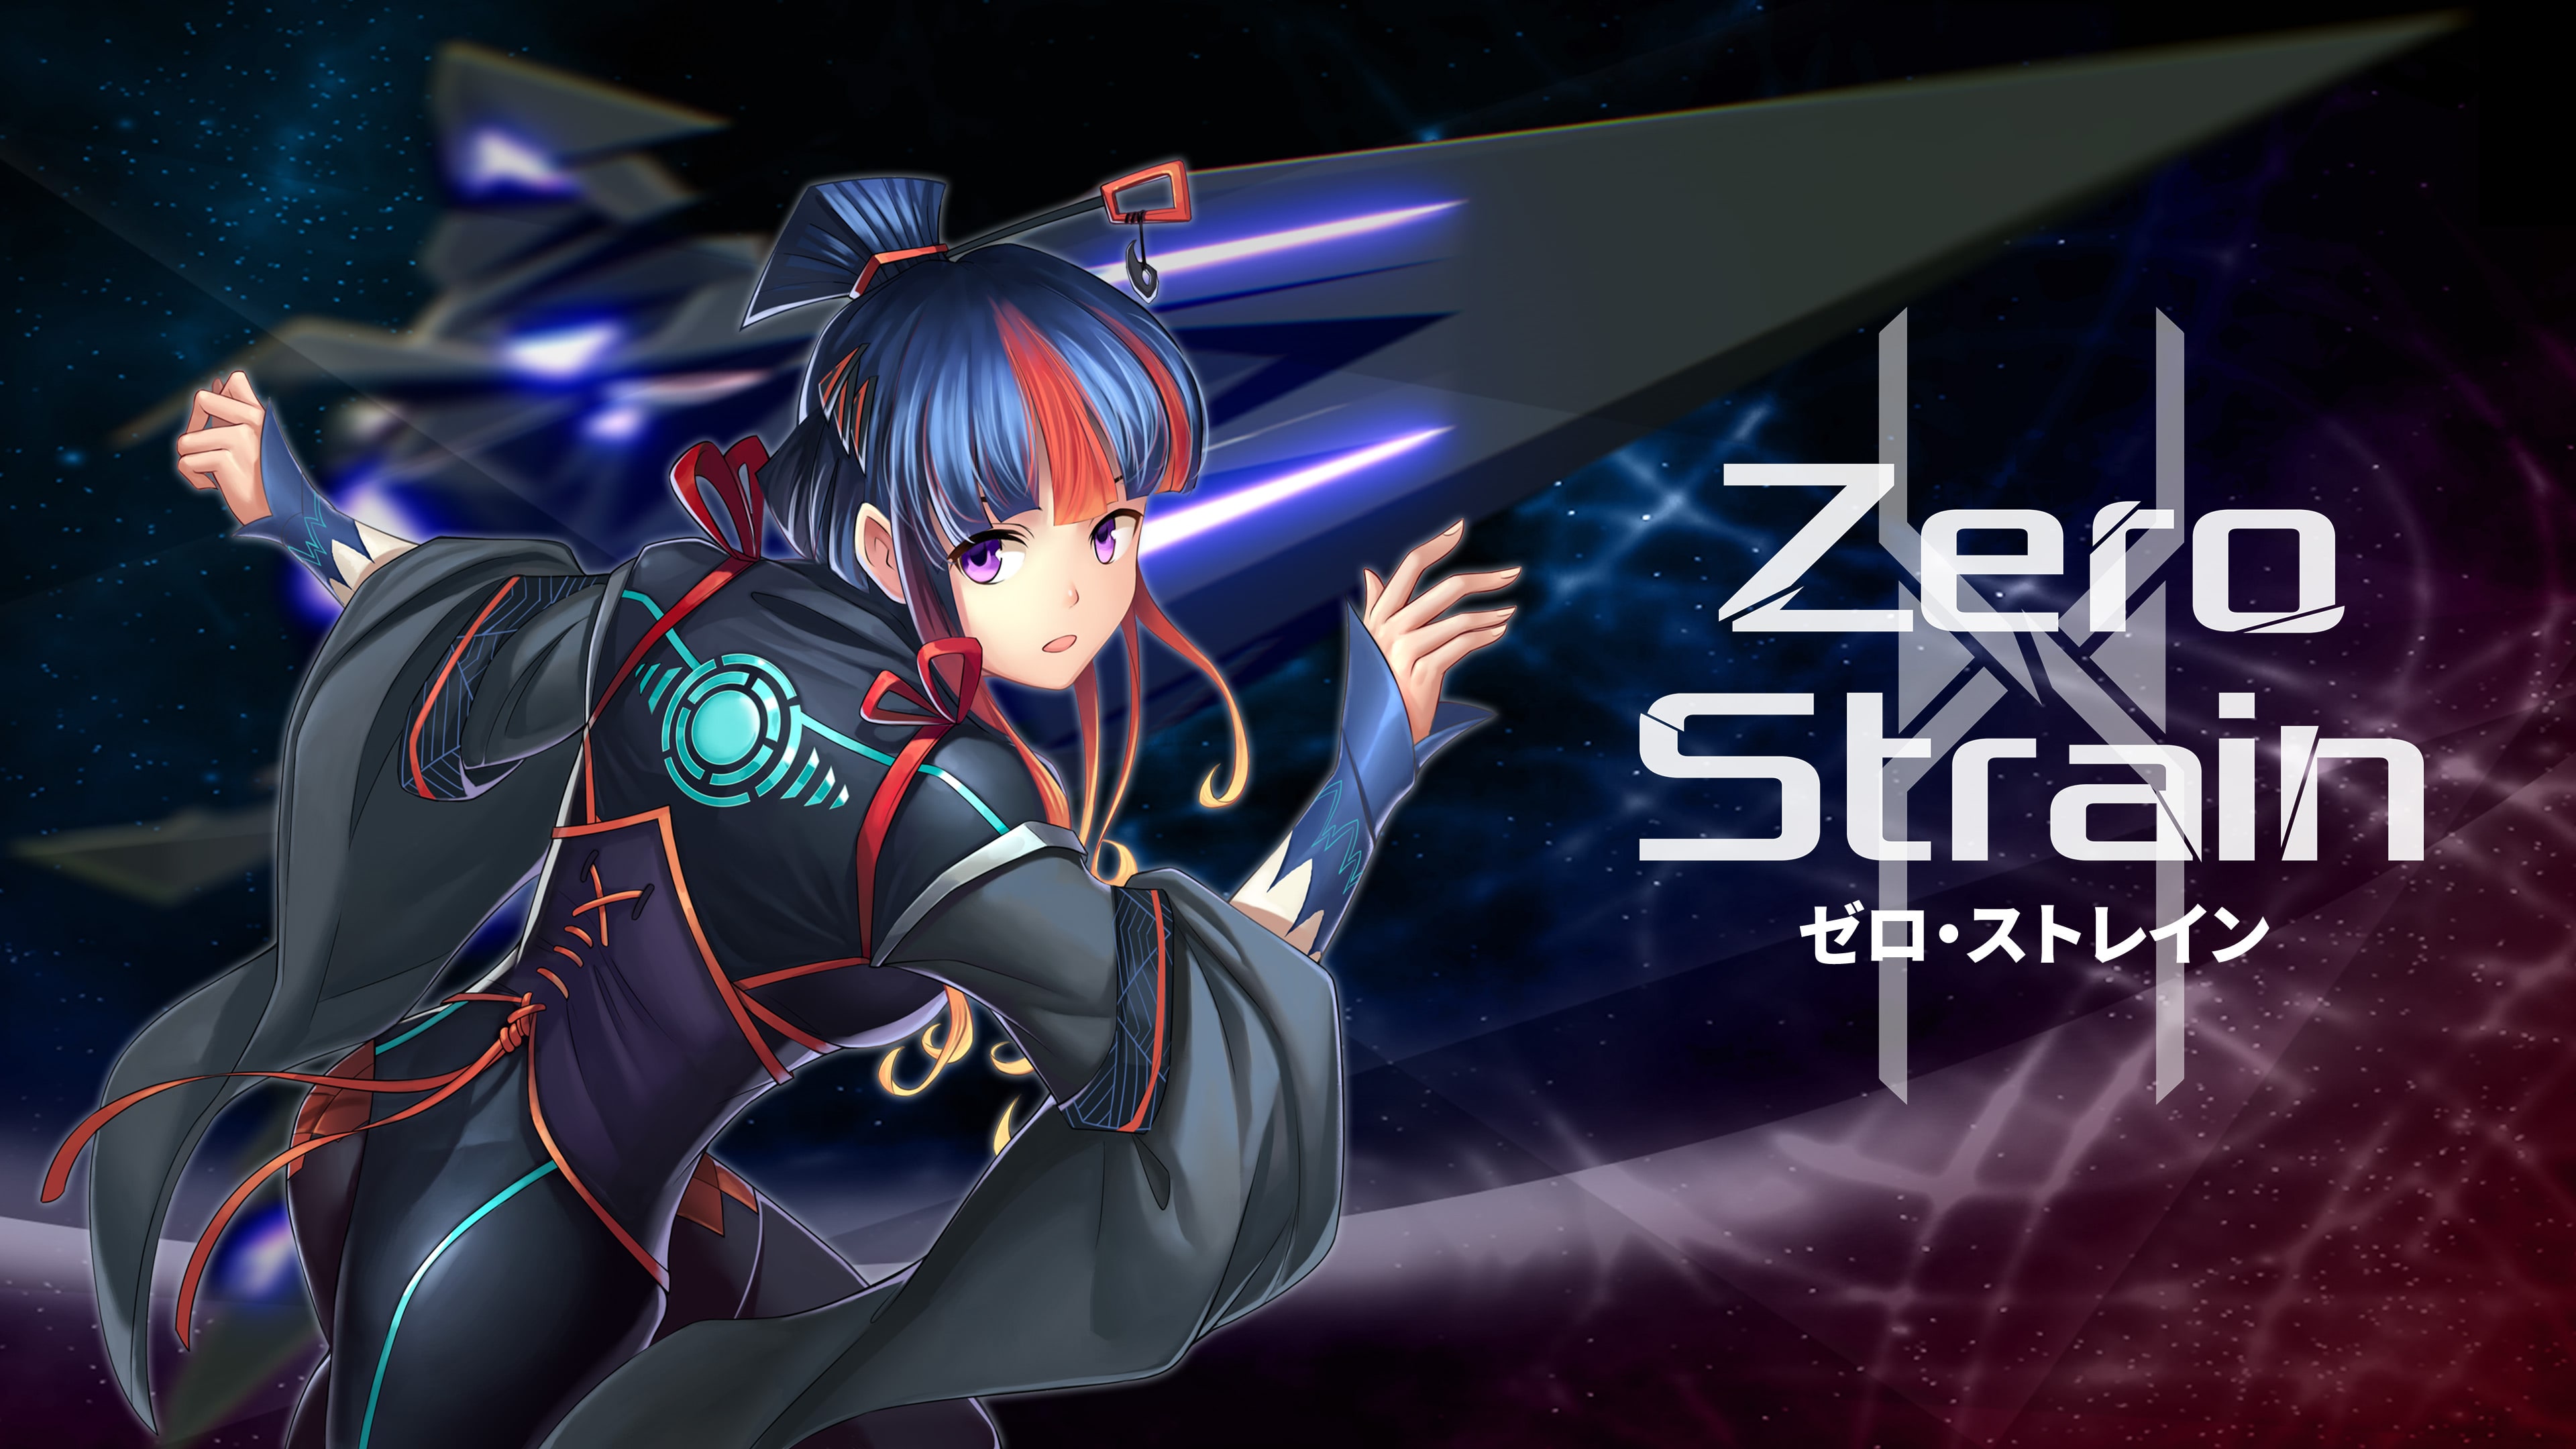 Zero Strain